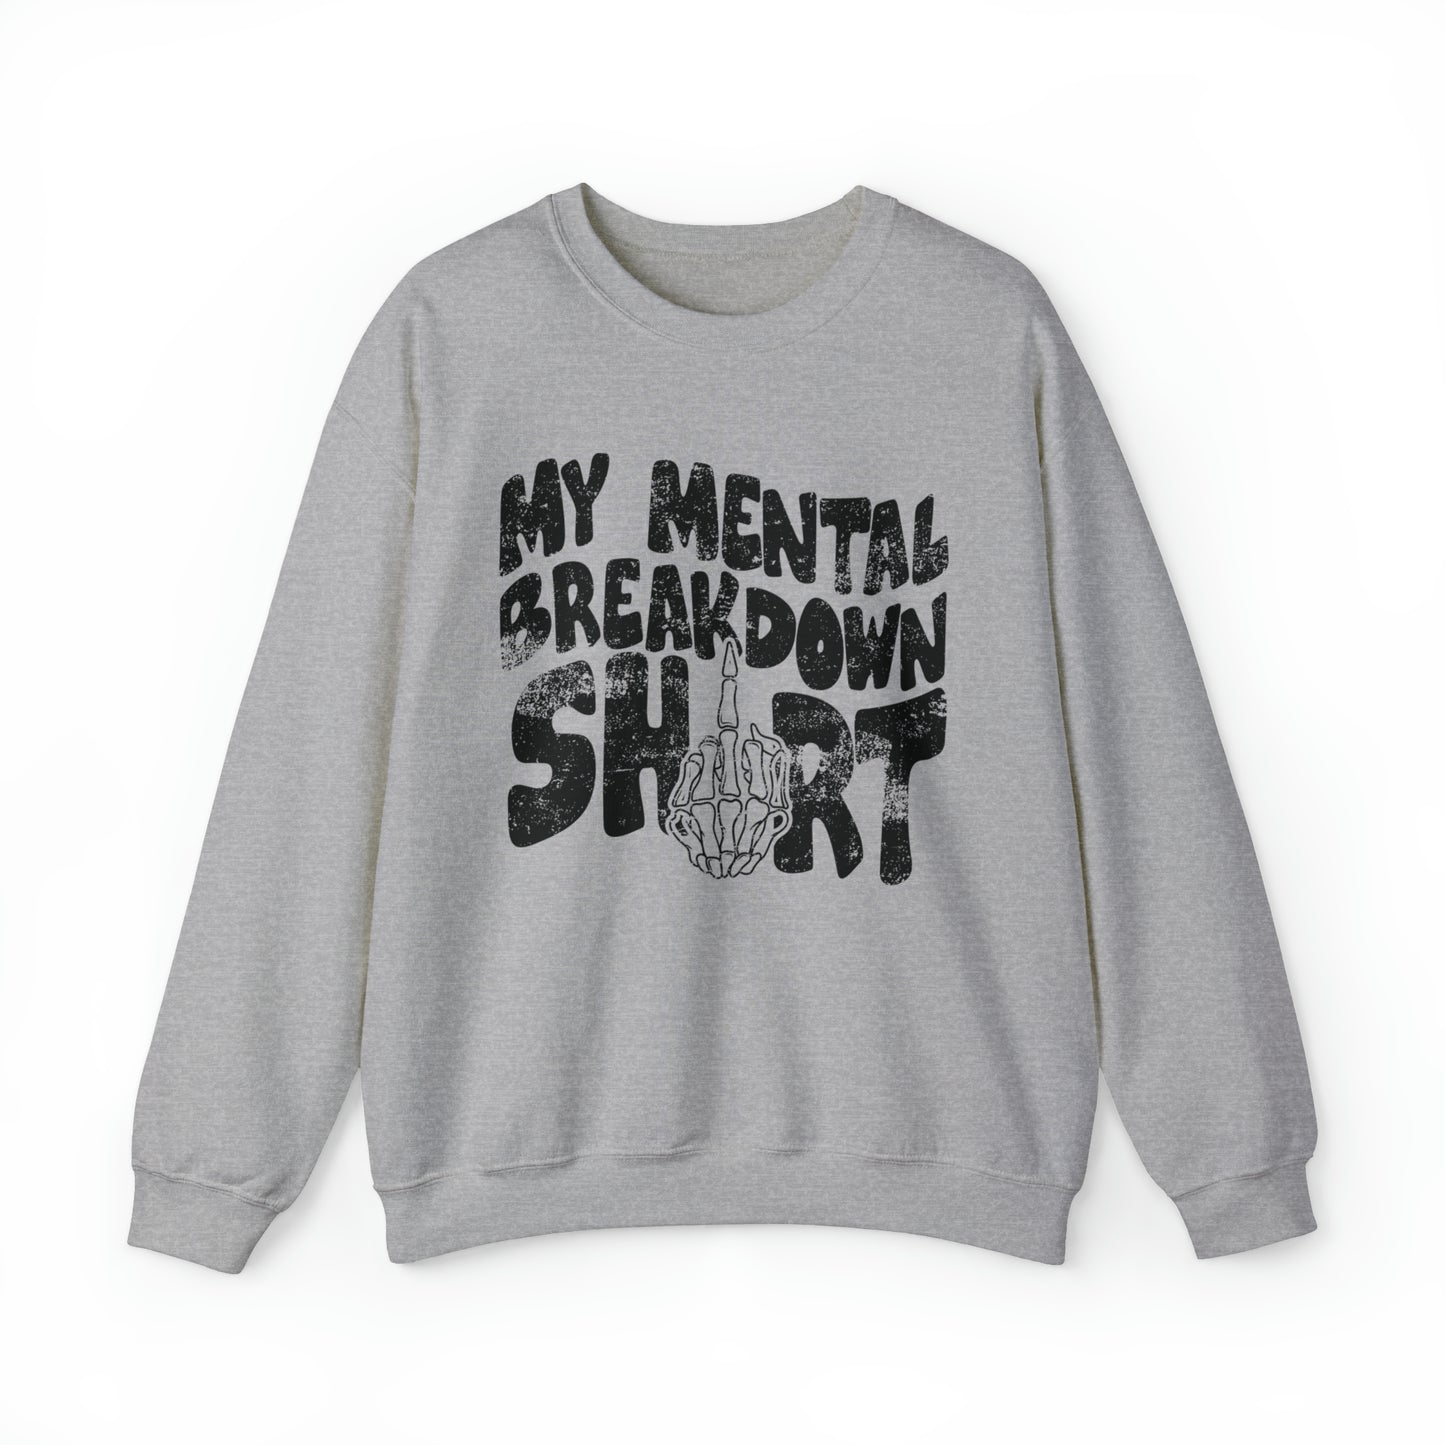 My mental breakdown Sweatshirt